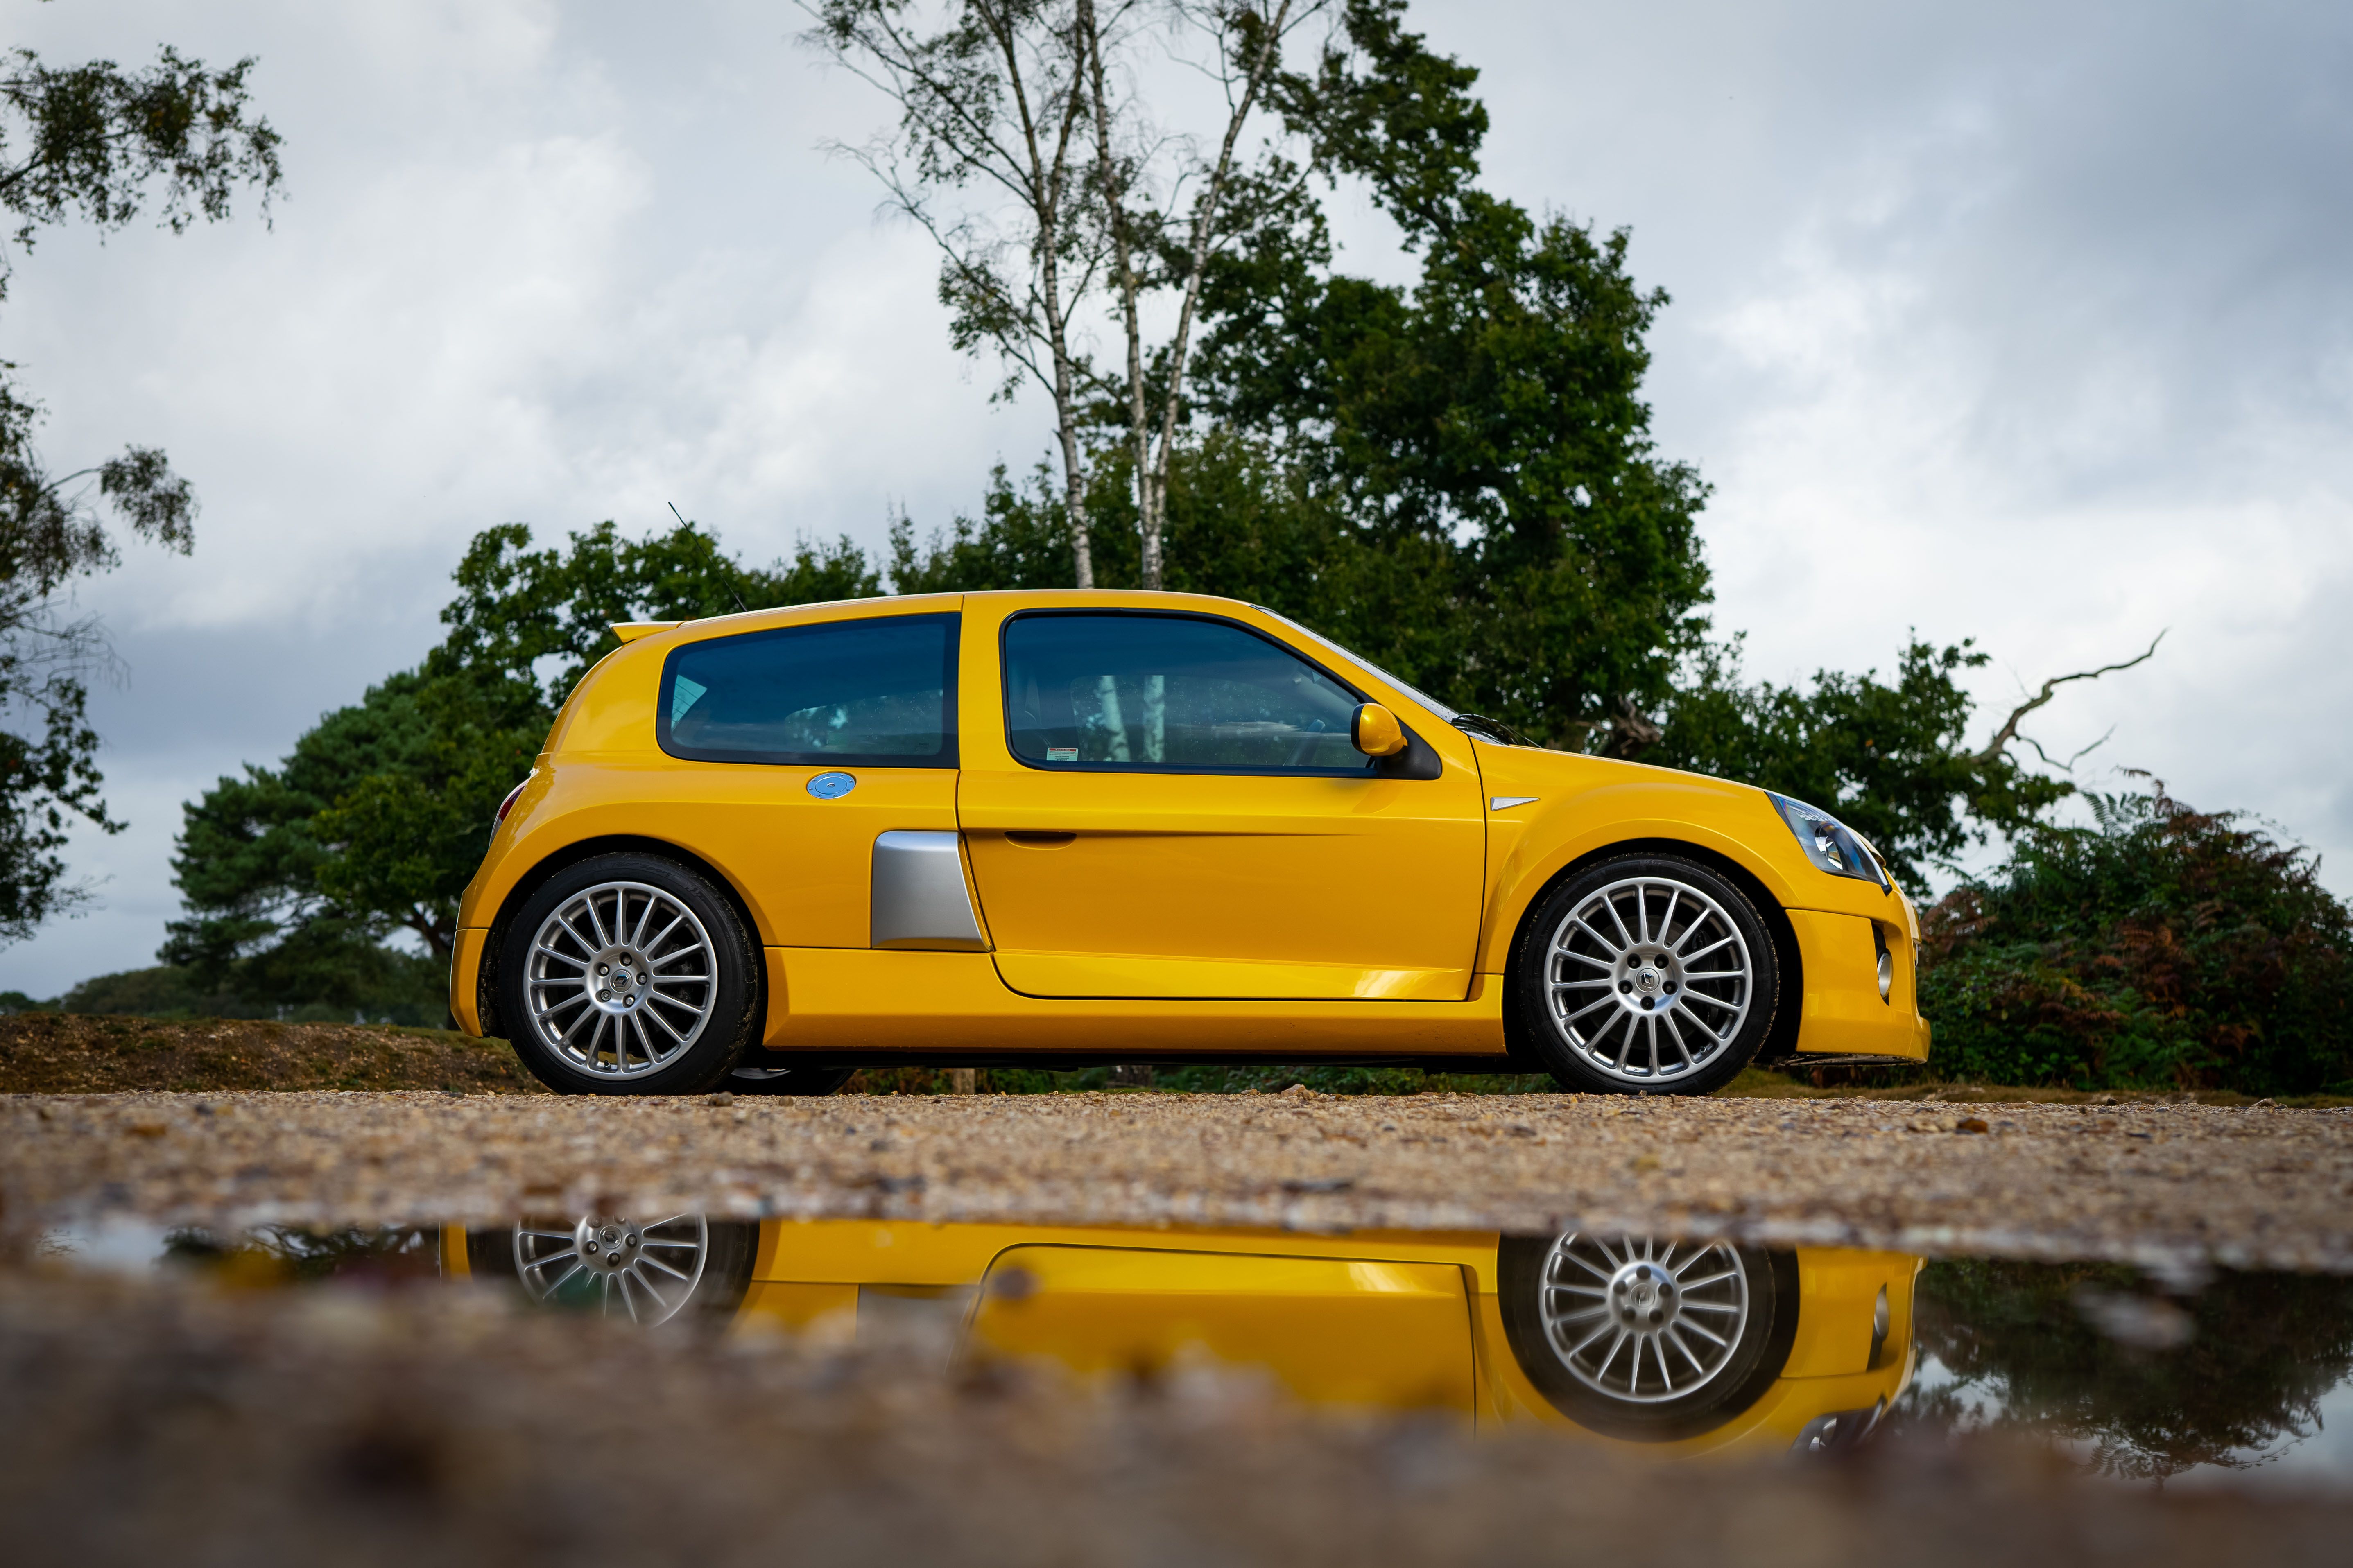 Renault Clio V6 Review - The most insane hot hatch ever? - Club Clio UK  Website